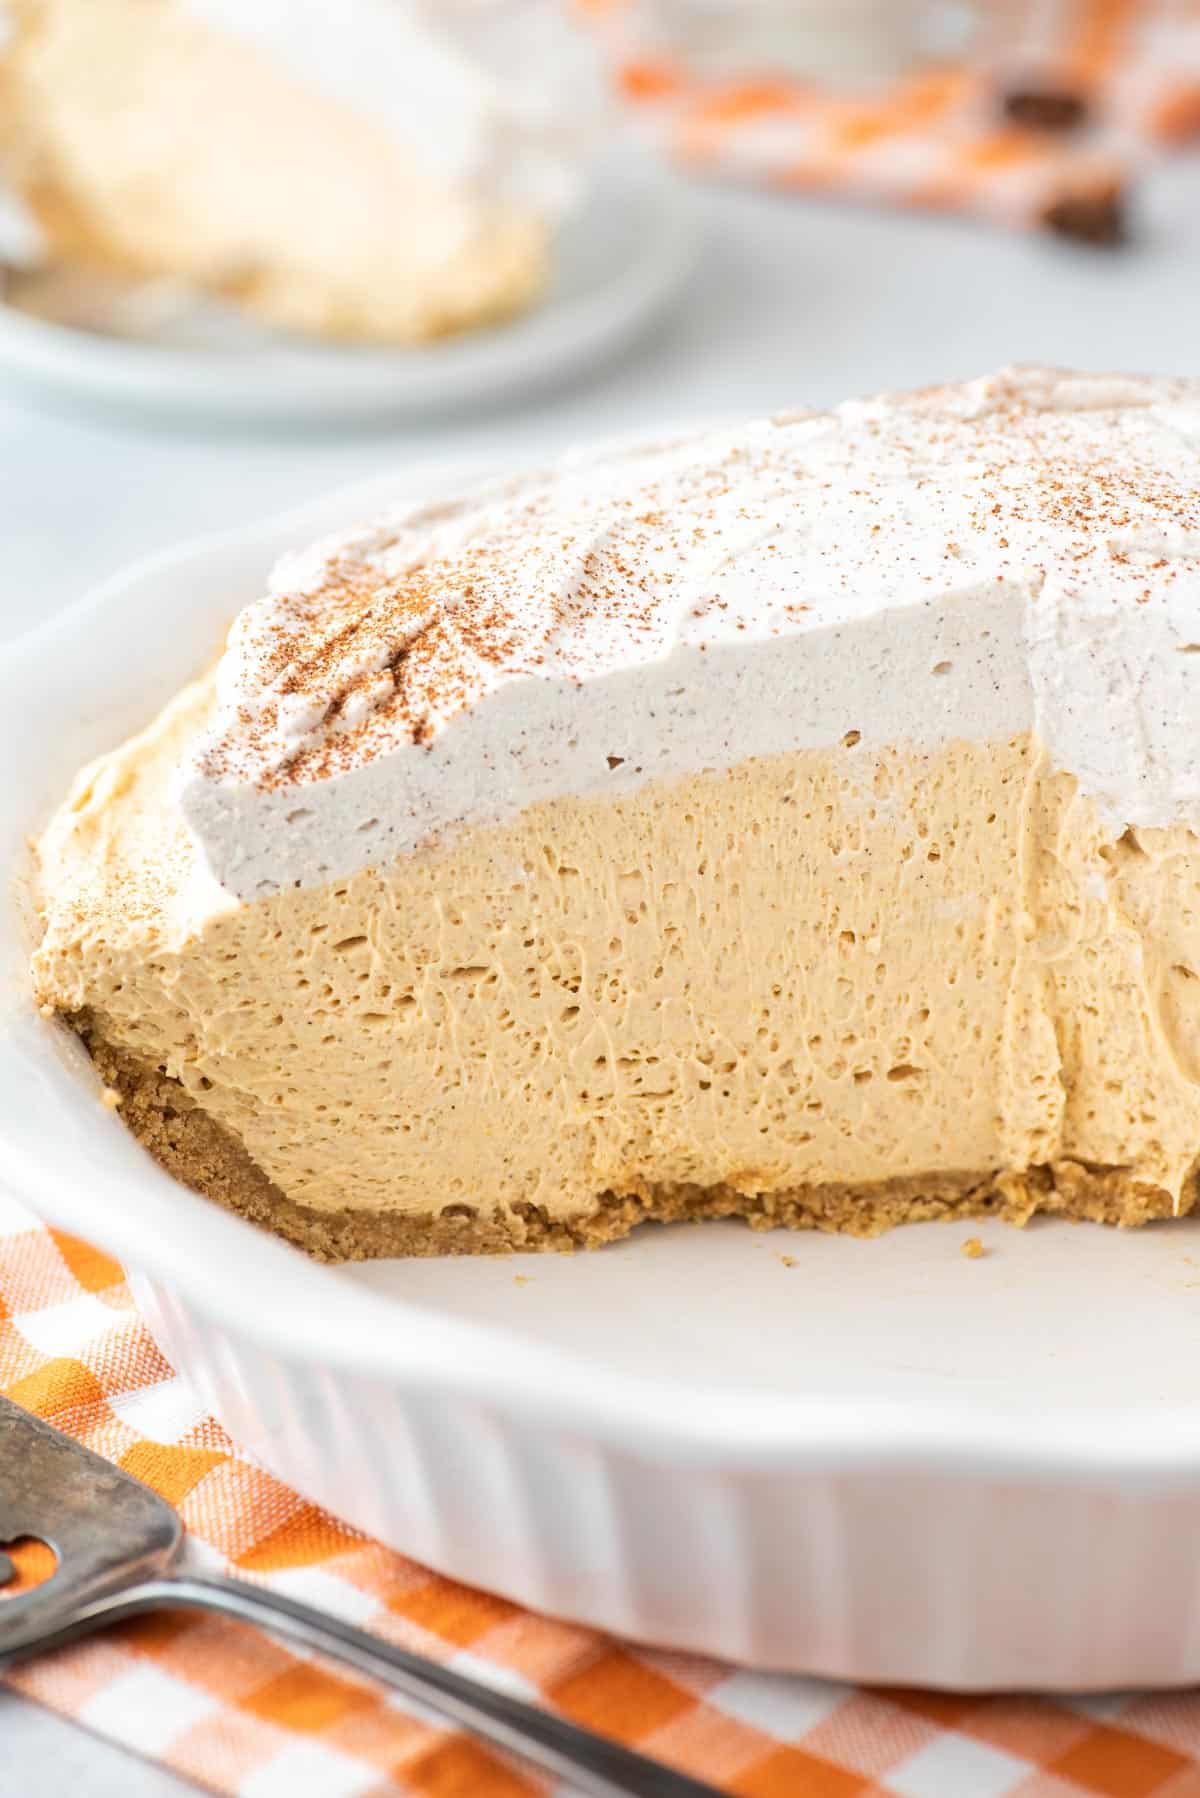 A light and creamy piece of no bake pumpkin pie sits on a white dessert plate.